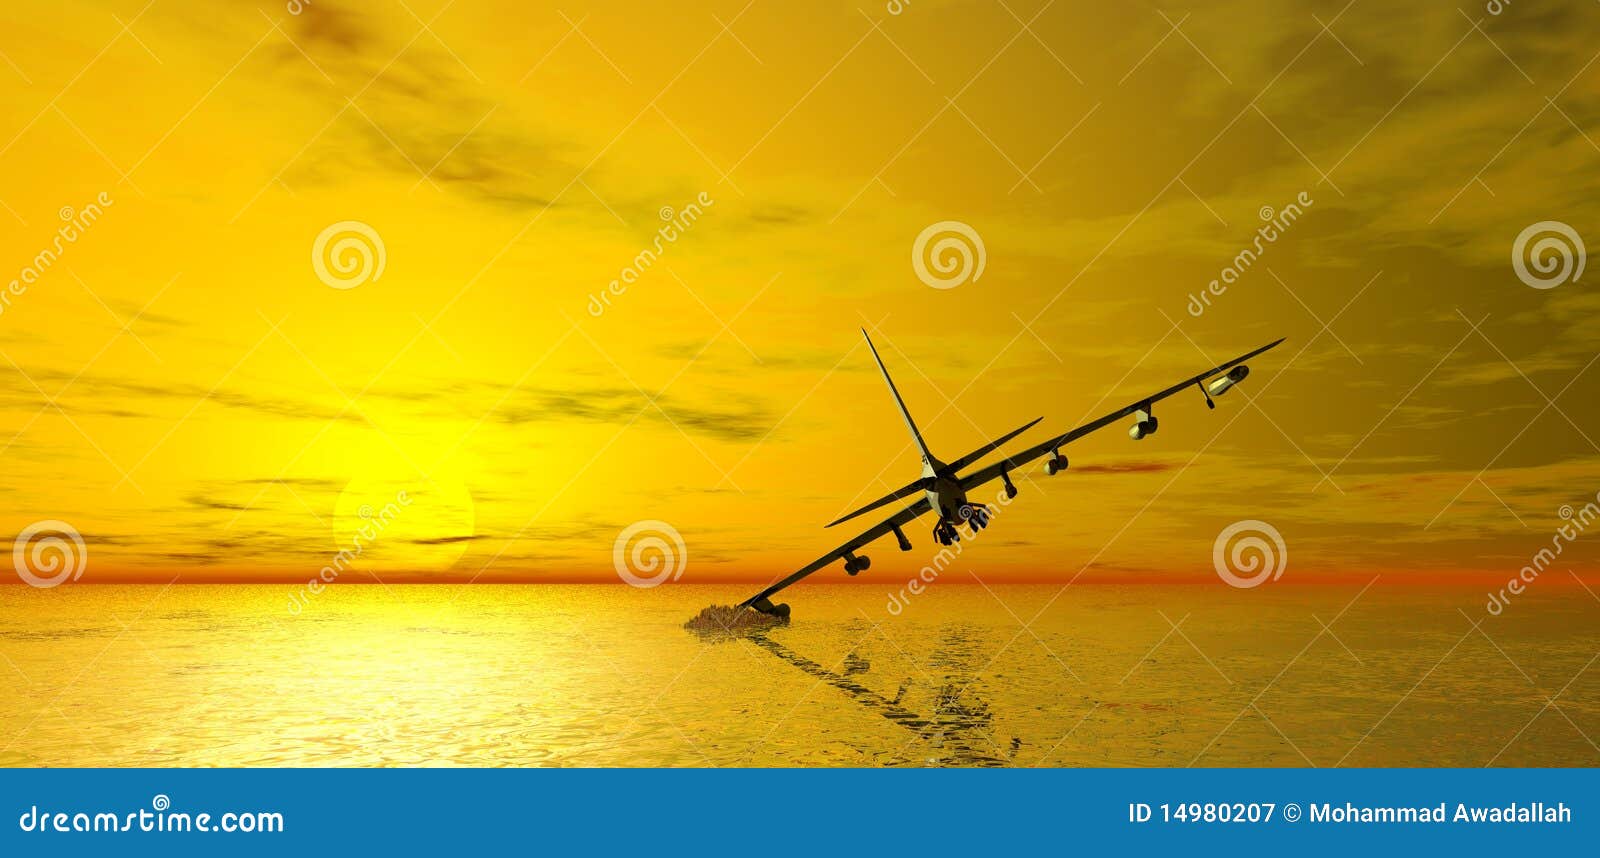 море воздушных судн разбивая. предпосылка воздушных судн разбивая золотистым задним silhouetted морем крыло взгляда подсказки захода солнца